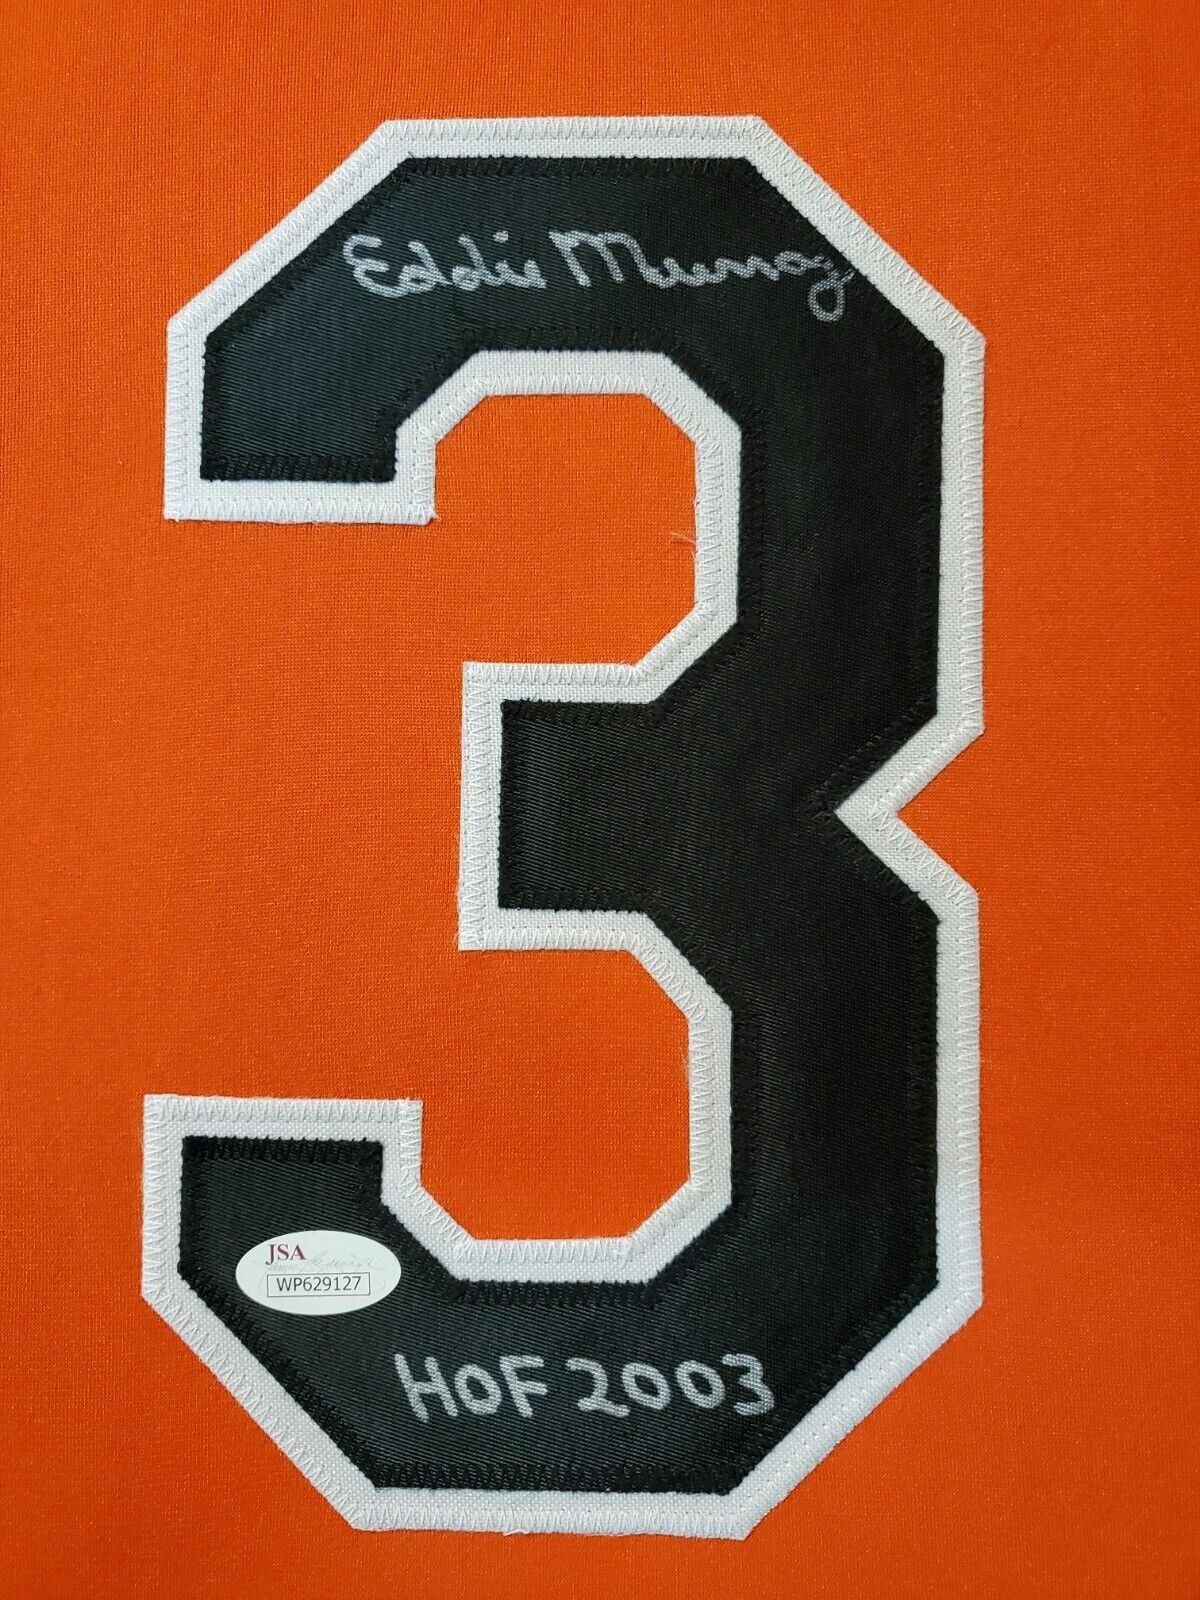 MVP Authentics Framed Suede Baltimore Orioles Eddie Murray Signed Inscribed Jersey Jsa Coa 787.50 sports jersey framing , jersey framing